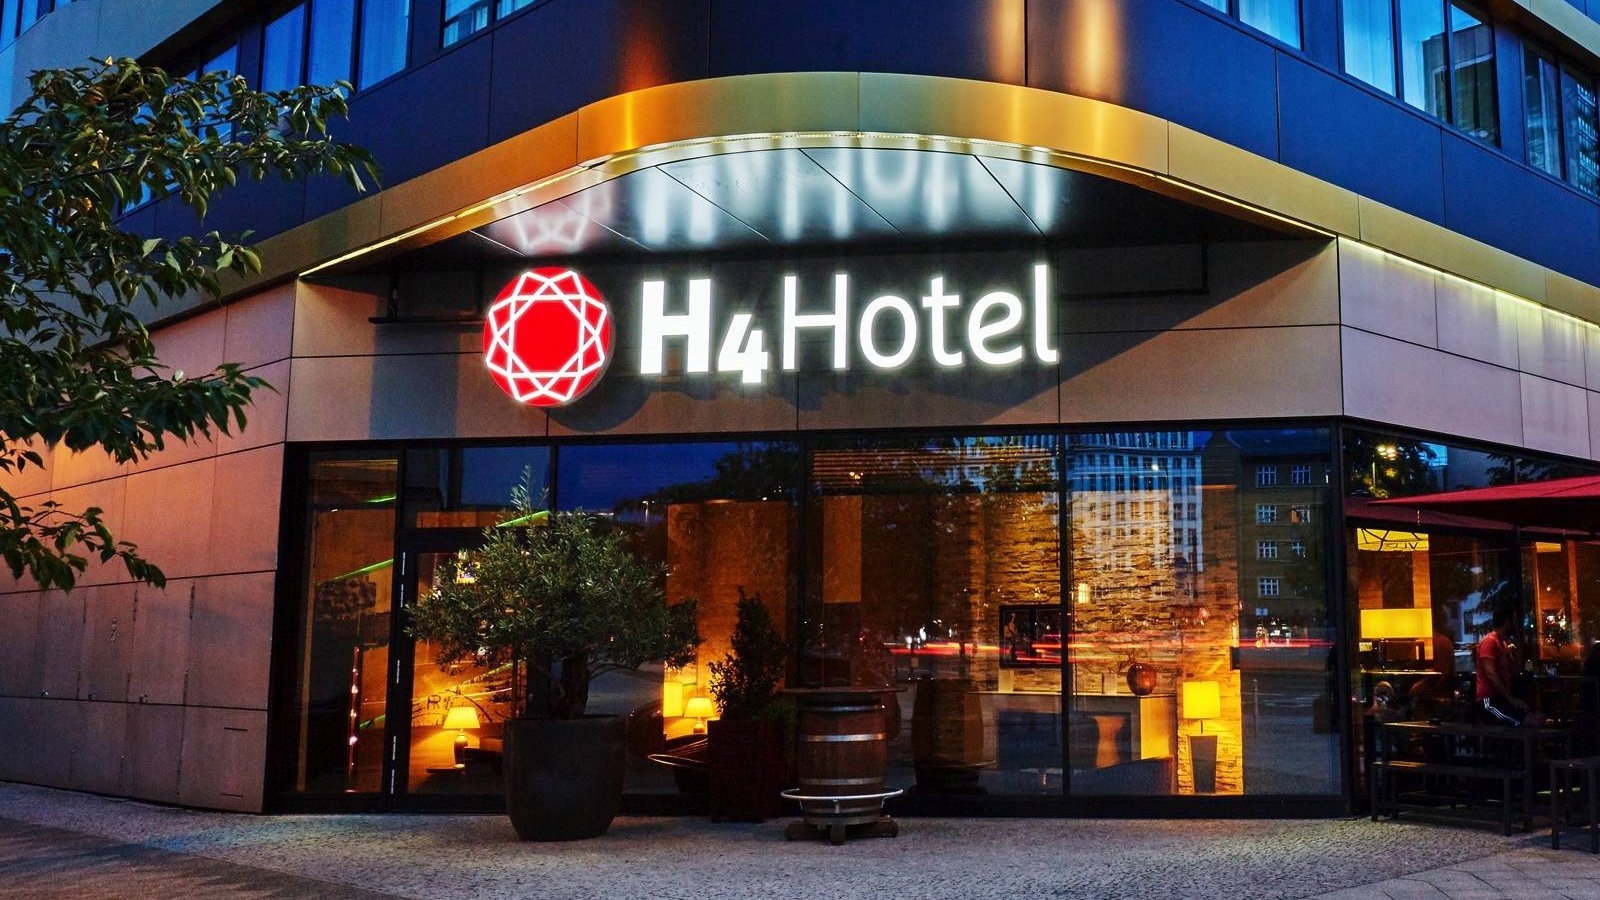 H4 Hotel in Germany